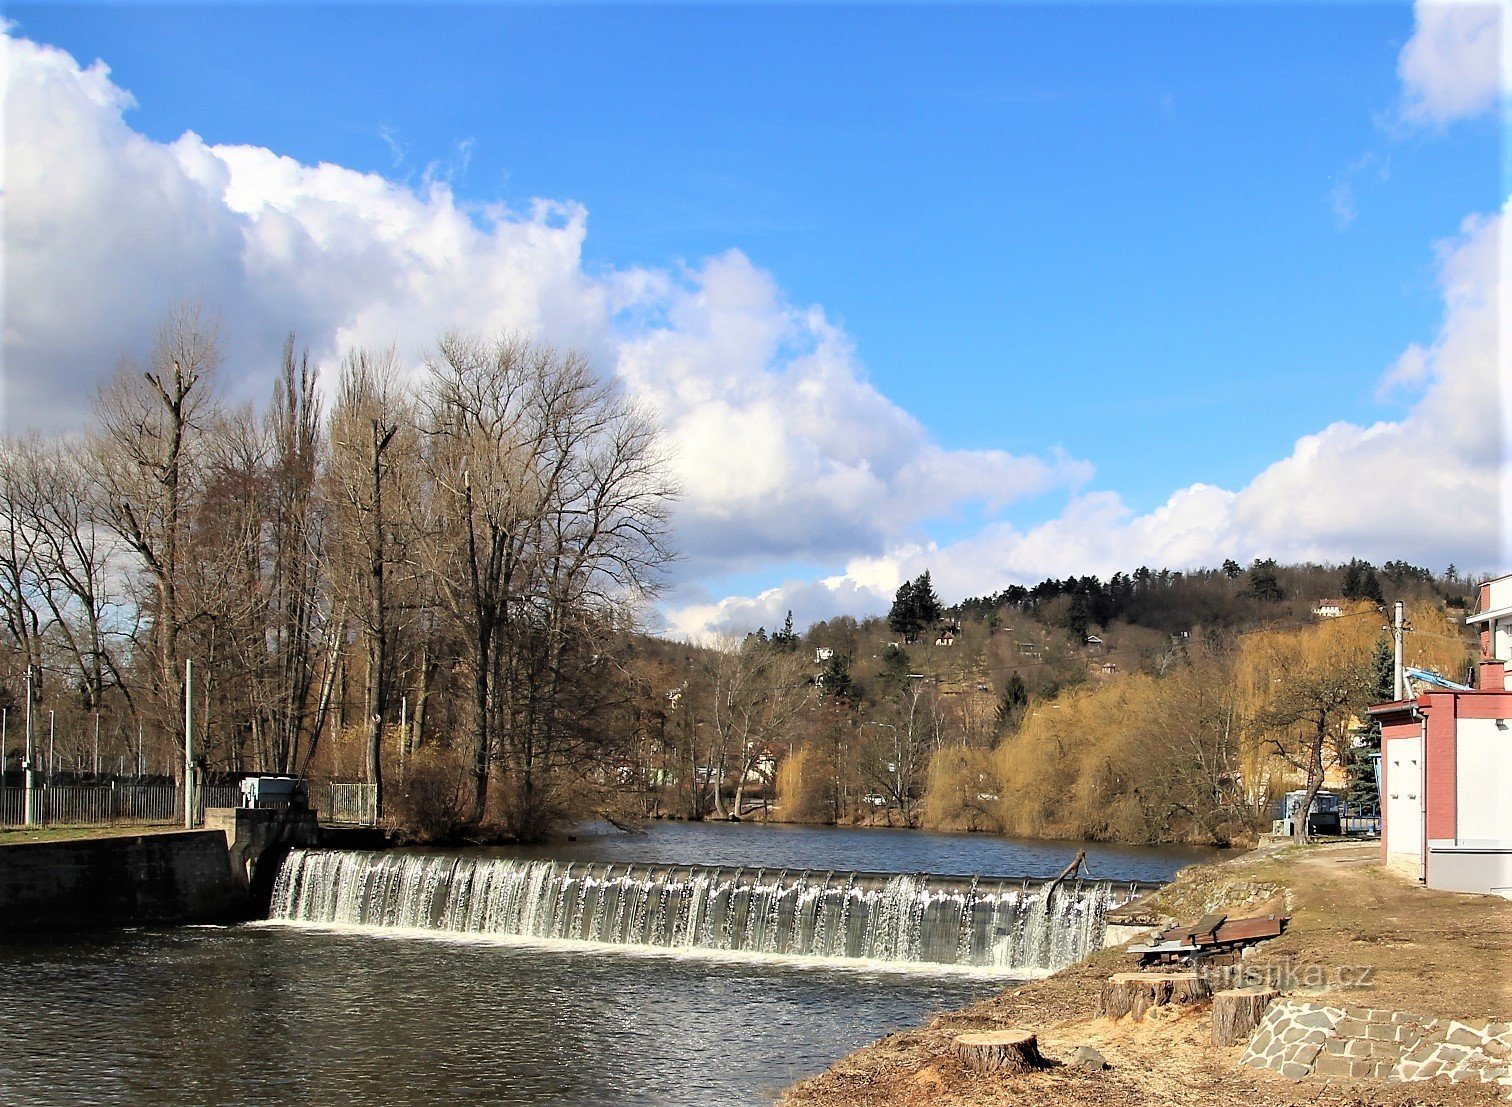 Der Ort der Veranstaltung befindet sich oberhalb des Komin-Damms in der Nähe des Ufers des Flusses Svratka